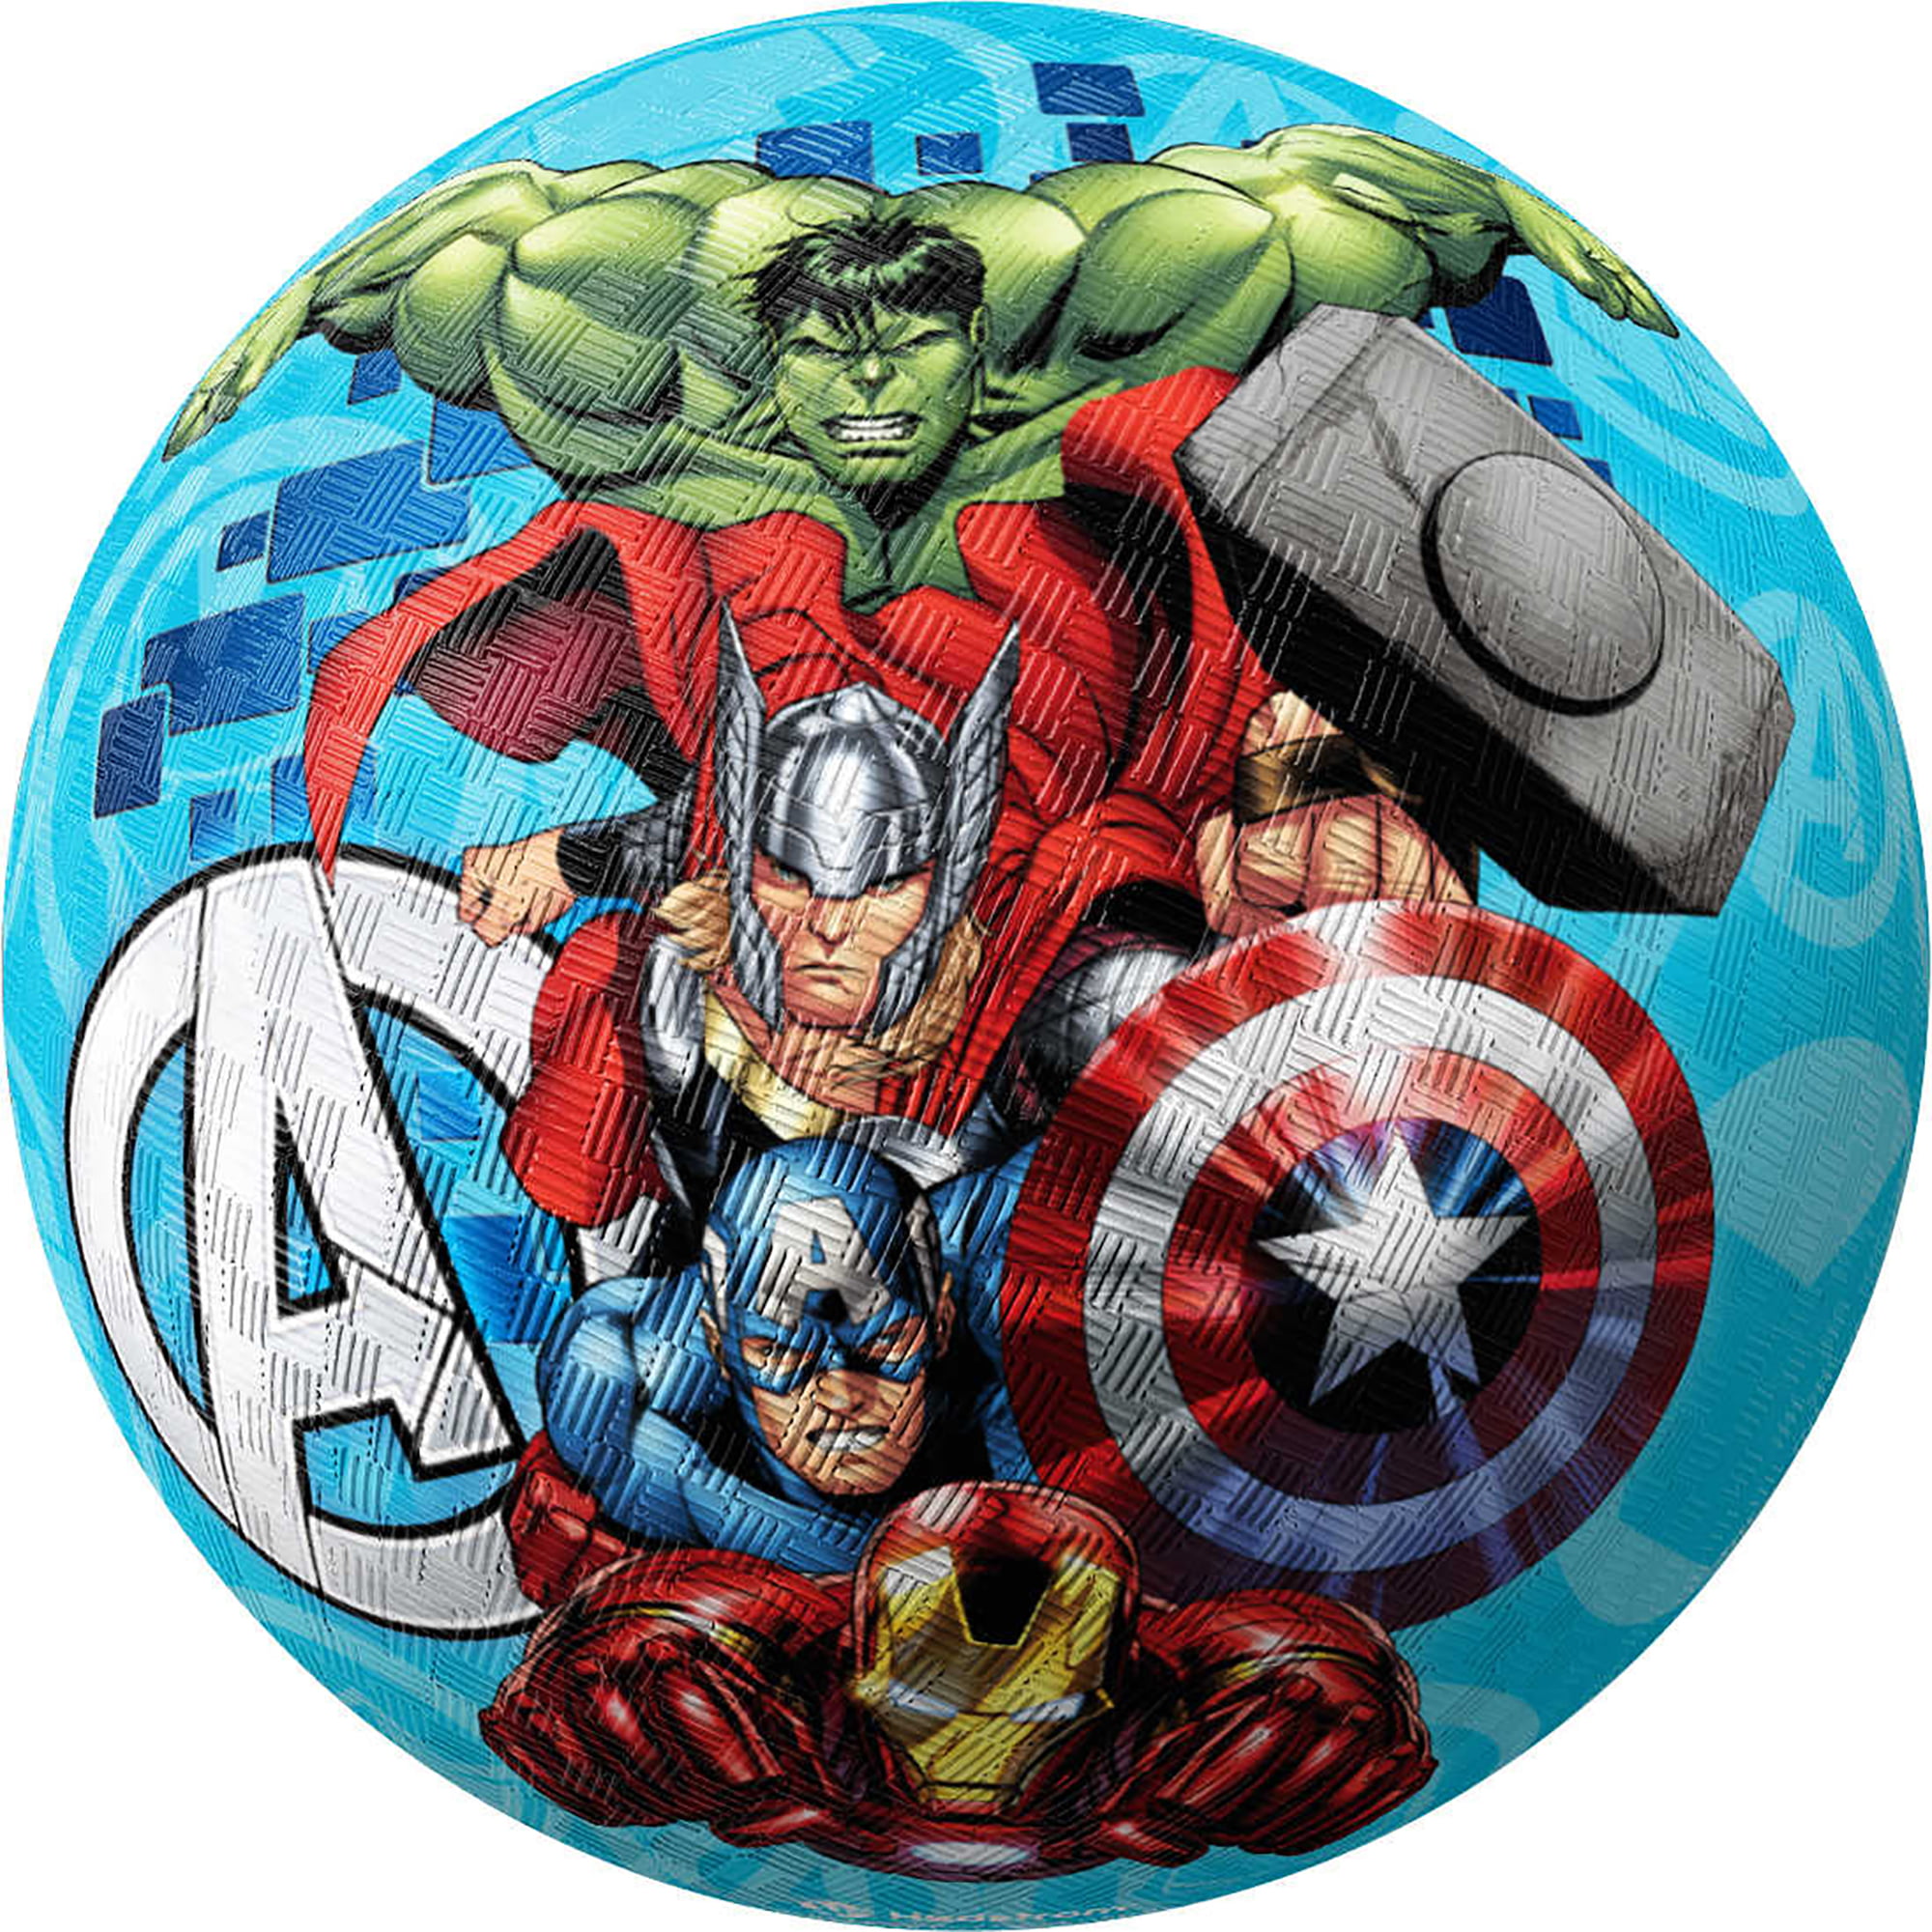 New Hedstrom Marvel Avengers Assemble 8 1/2" Kids Boy's Playground Rubber Ball 